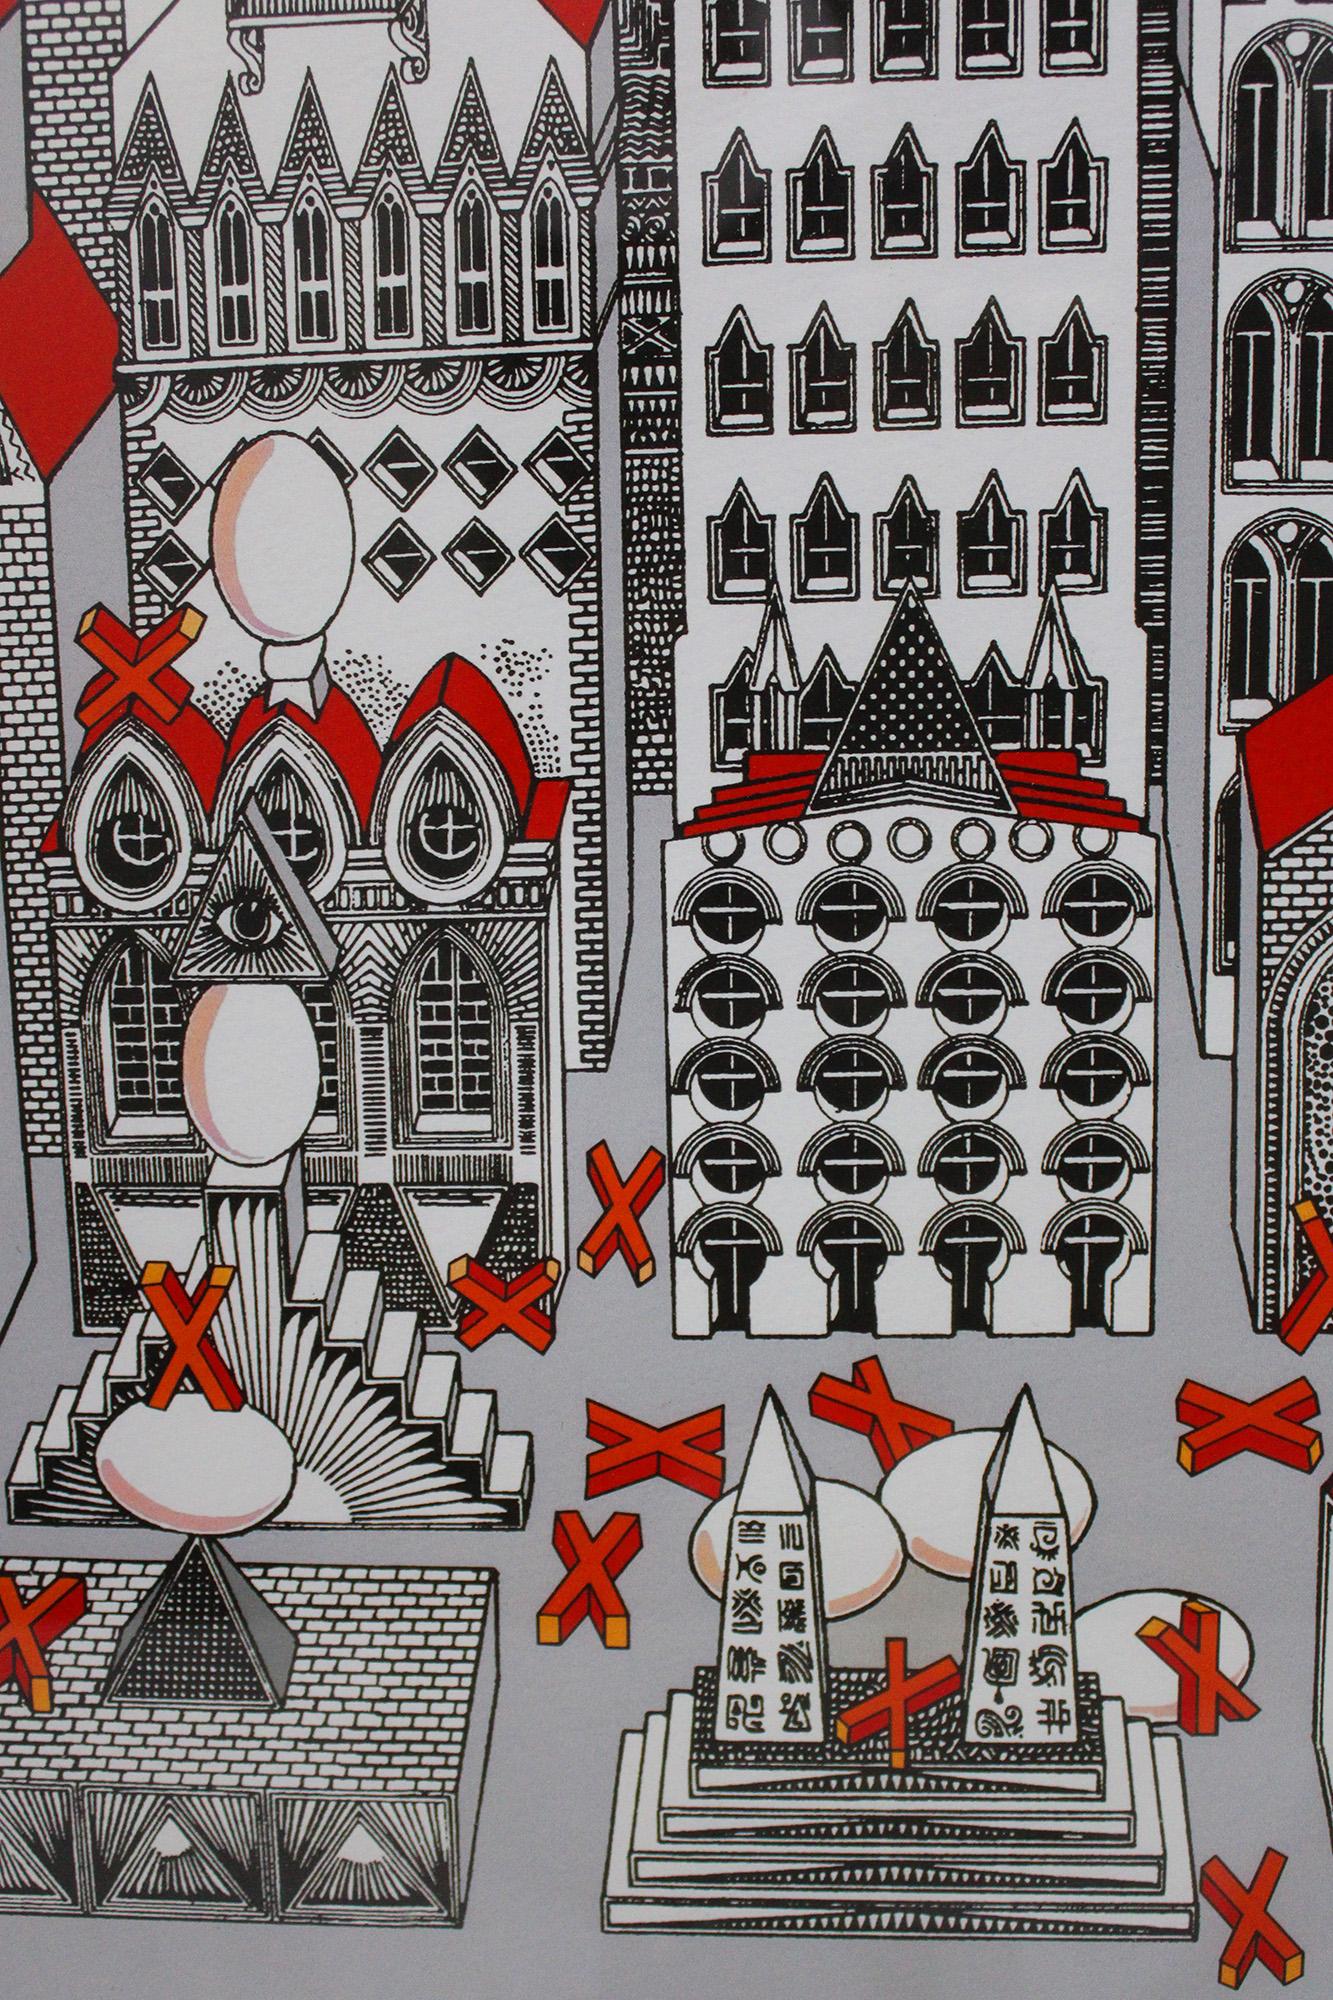 Ciudad de 1 millón de huevos con 25 duros (1 Million eggs city with 25 boiled) - Contemporary Print by Pedro Friedeberg